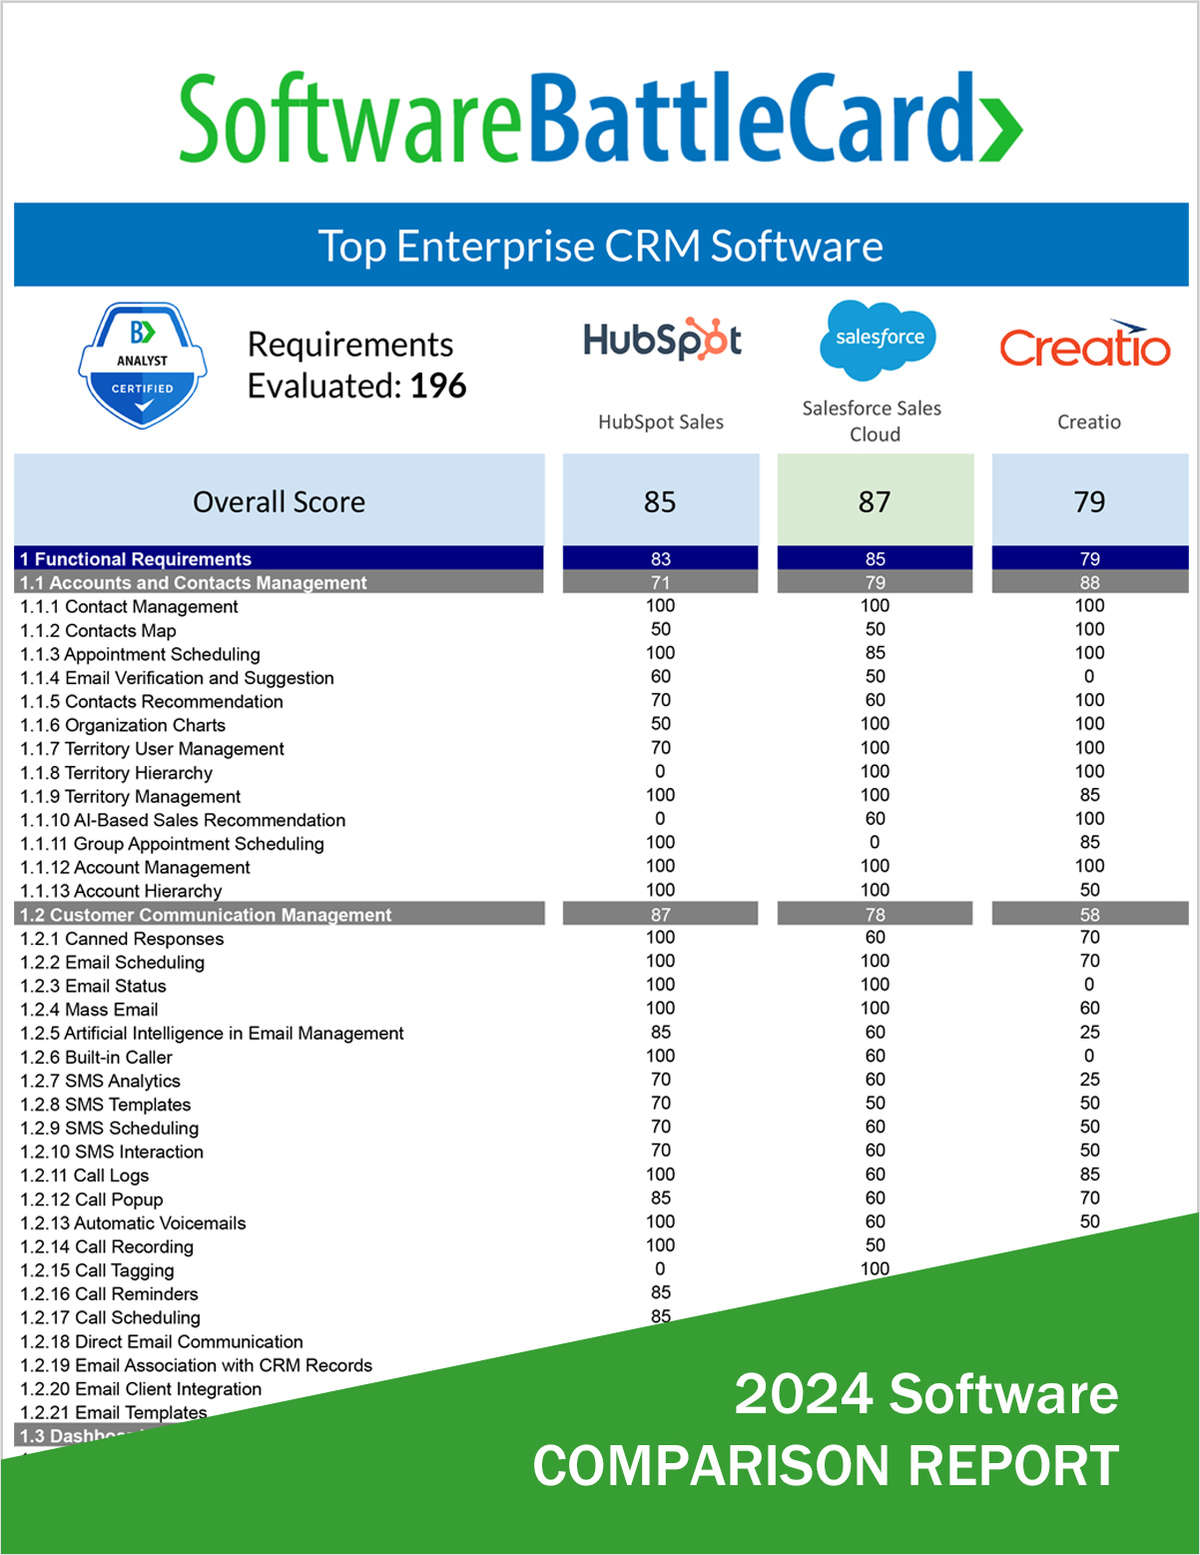 Top Enterprise CRM Software BattleCard--HubSpot Sales vs. Salesforce vs. Creatio